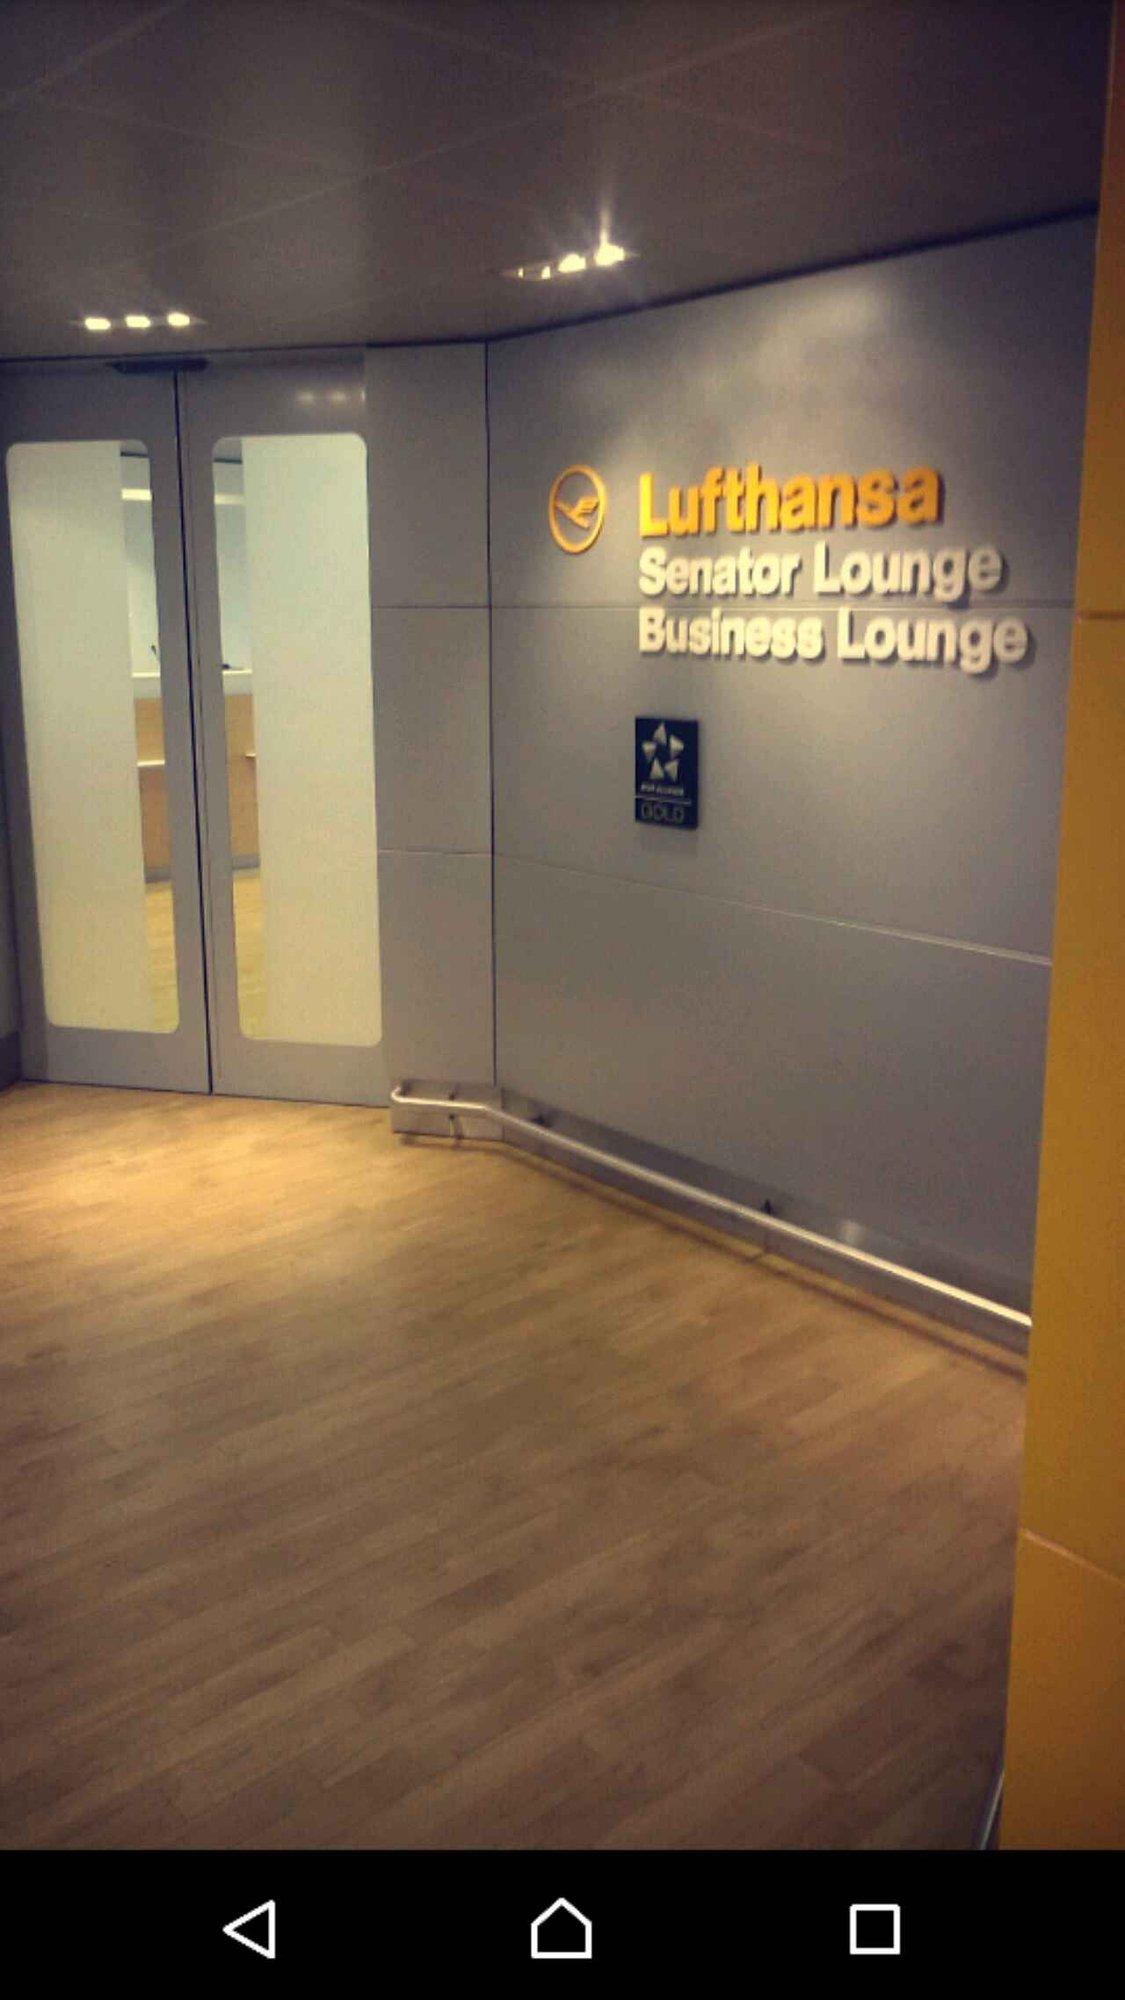 Lufthansa Senator Lounge image 6 of 6